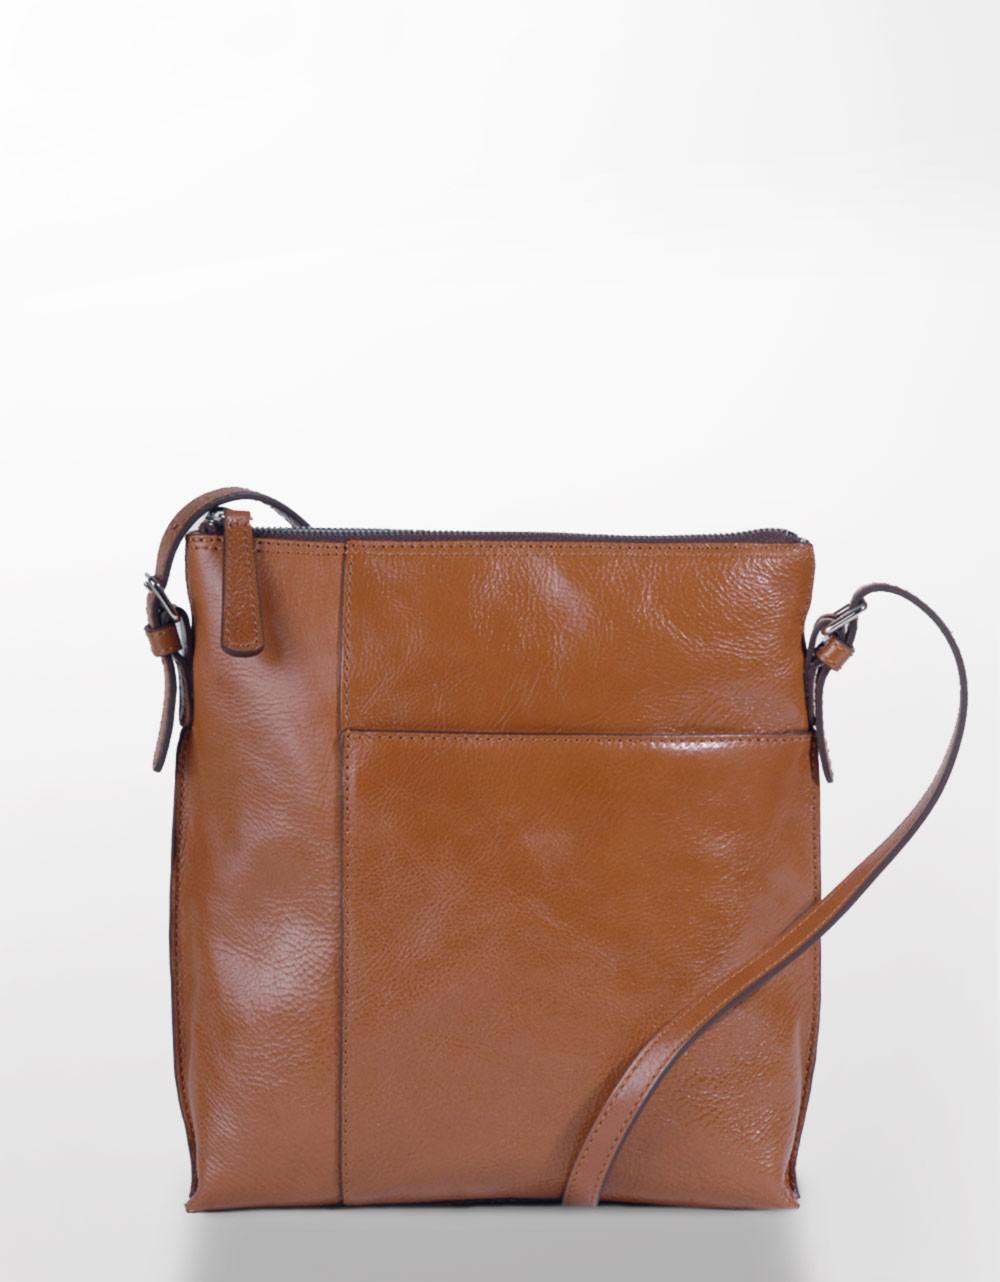 Hobo International Alessa Leather Cross-Body Bag in Brown (cognac) | Lyst